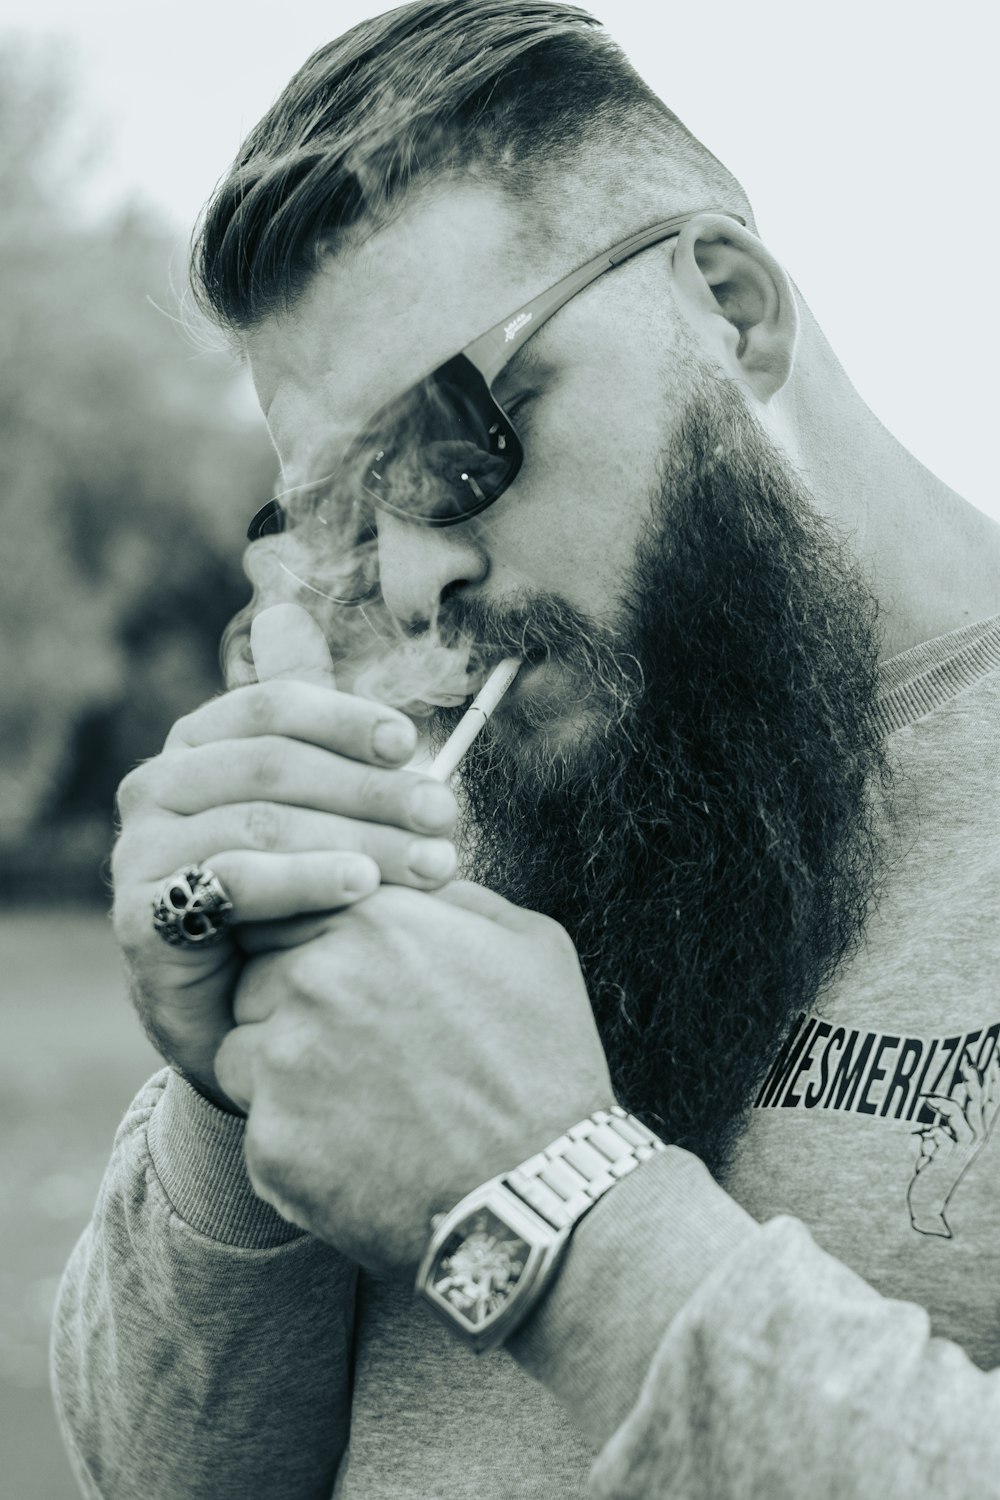 a man with a long beard smoking a cigarette